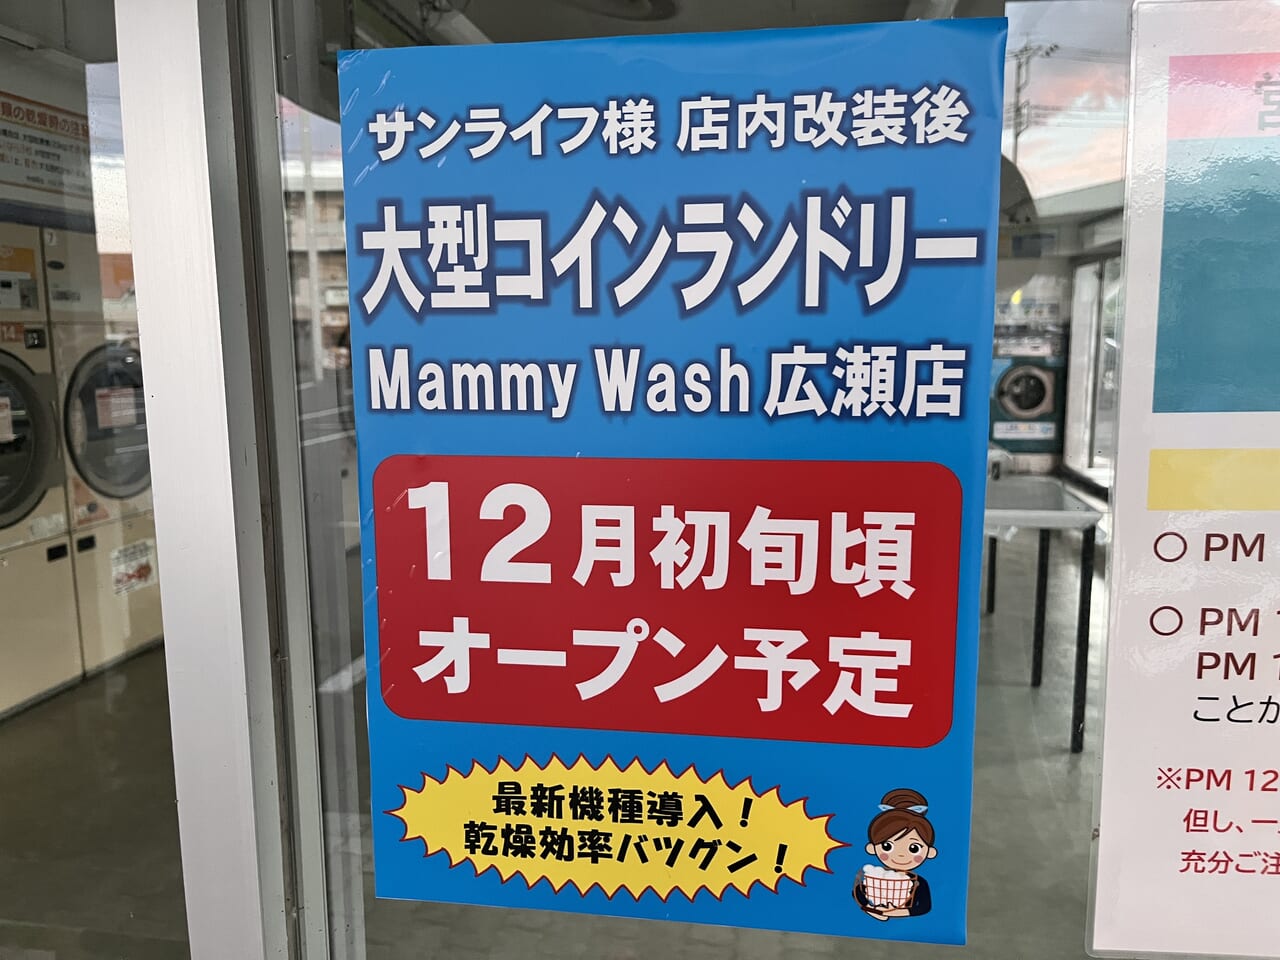 「Mammy Wash 広瀬店」オープン告知のポスター